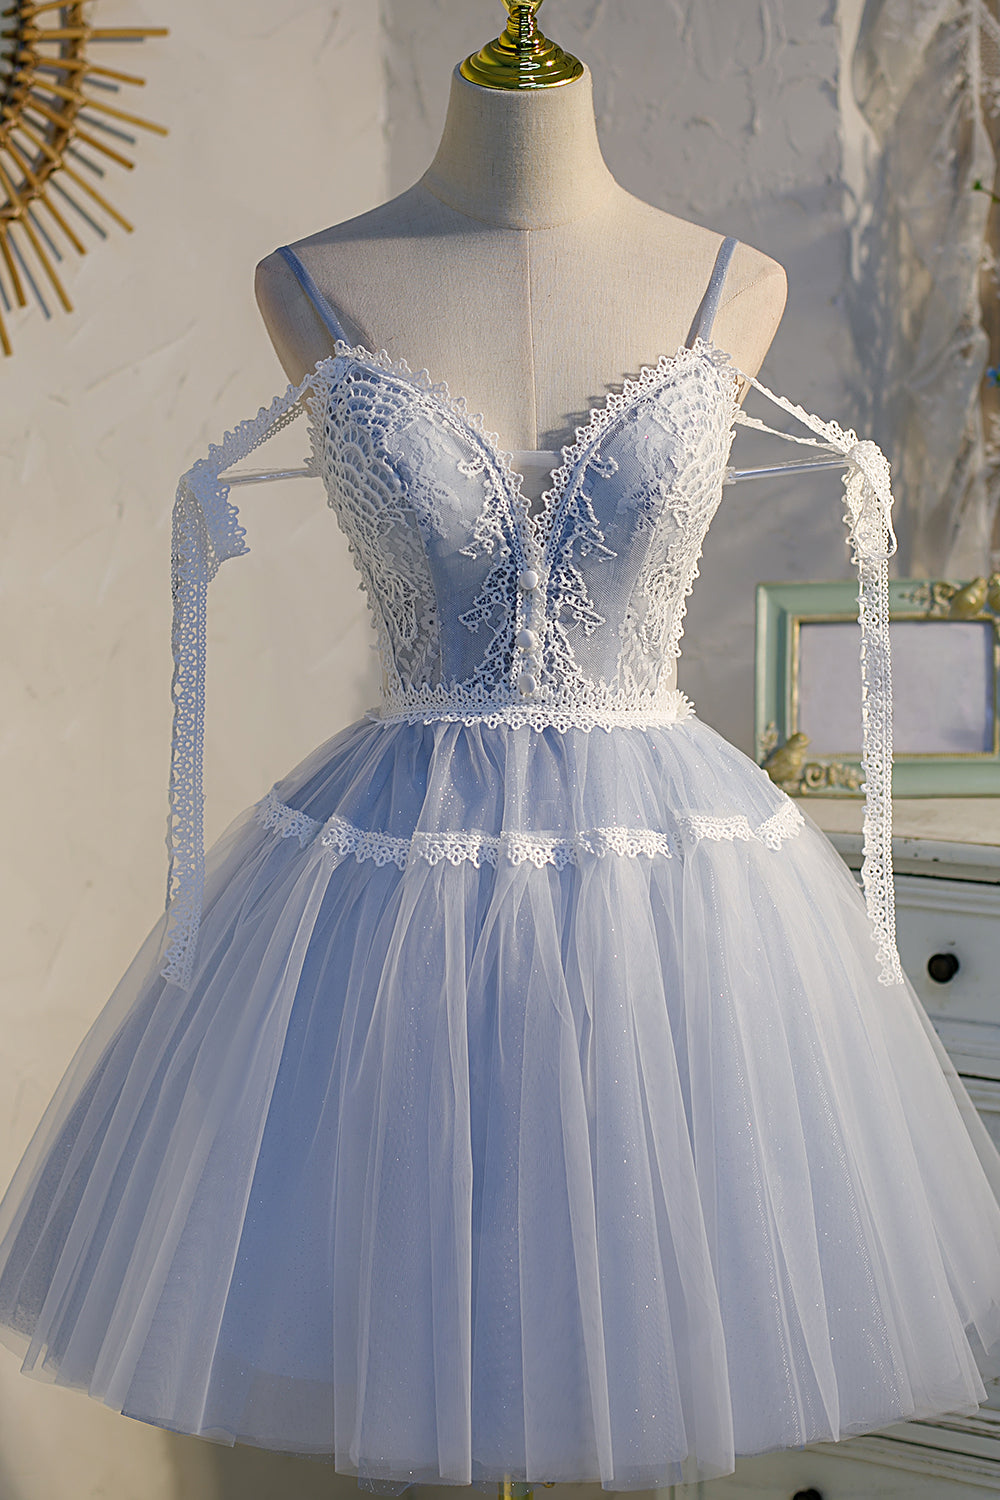 Bridesmaids Dresses Beach Wedding, Light Blue Spaghetti Straps Lace Tulle Short Homecoming Dresses